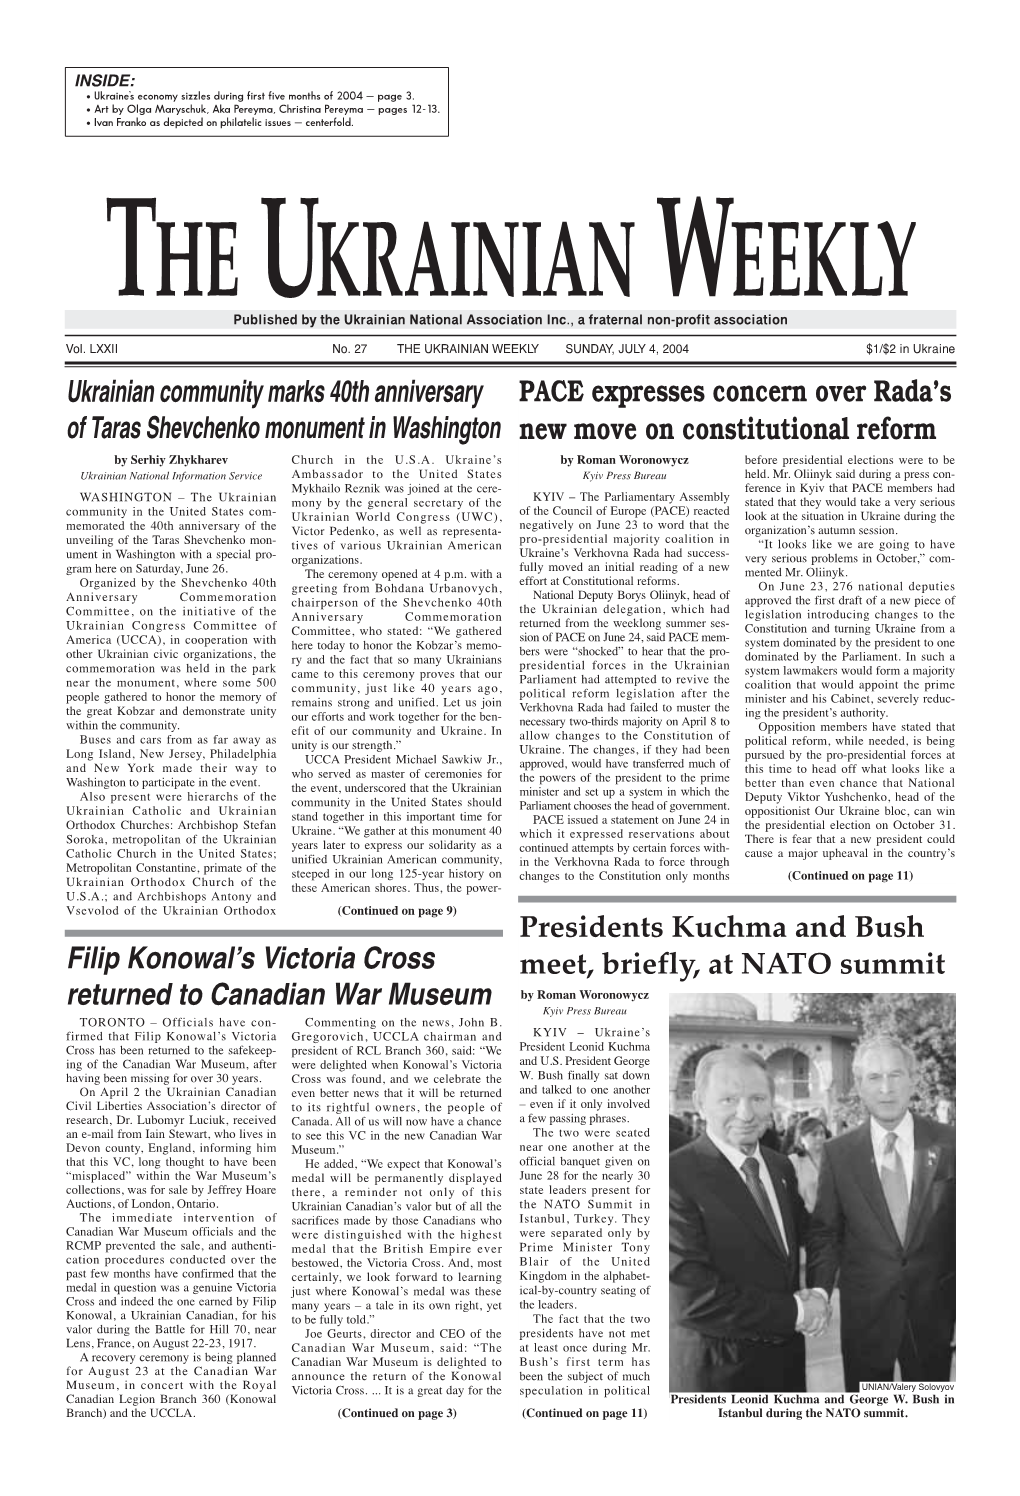 The Ukrainian Weekly 2004, No.27